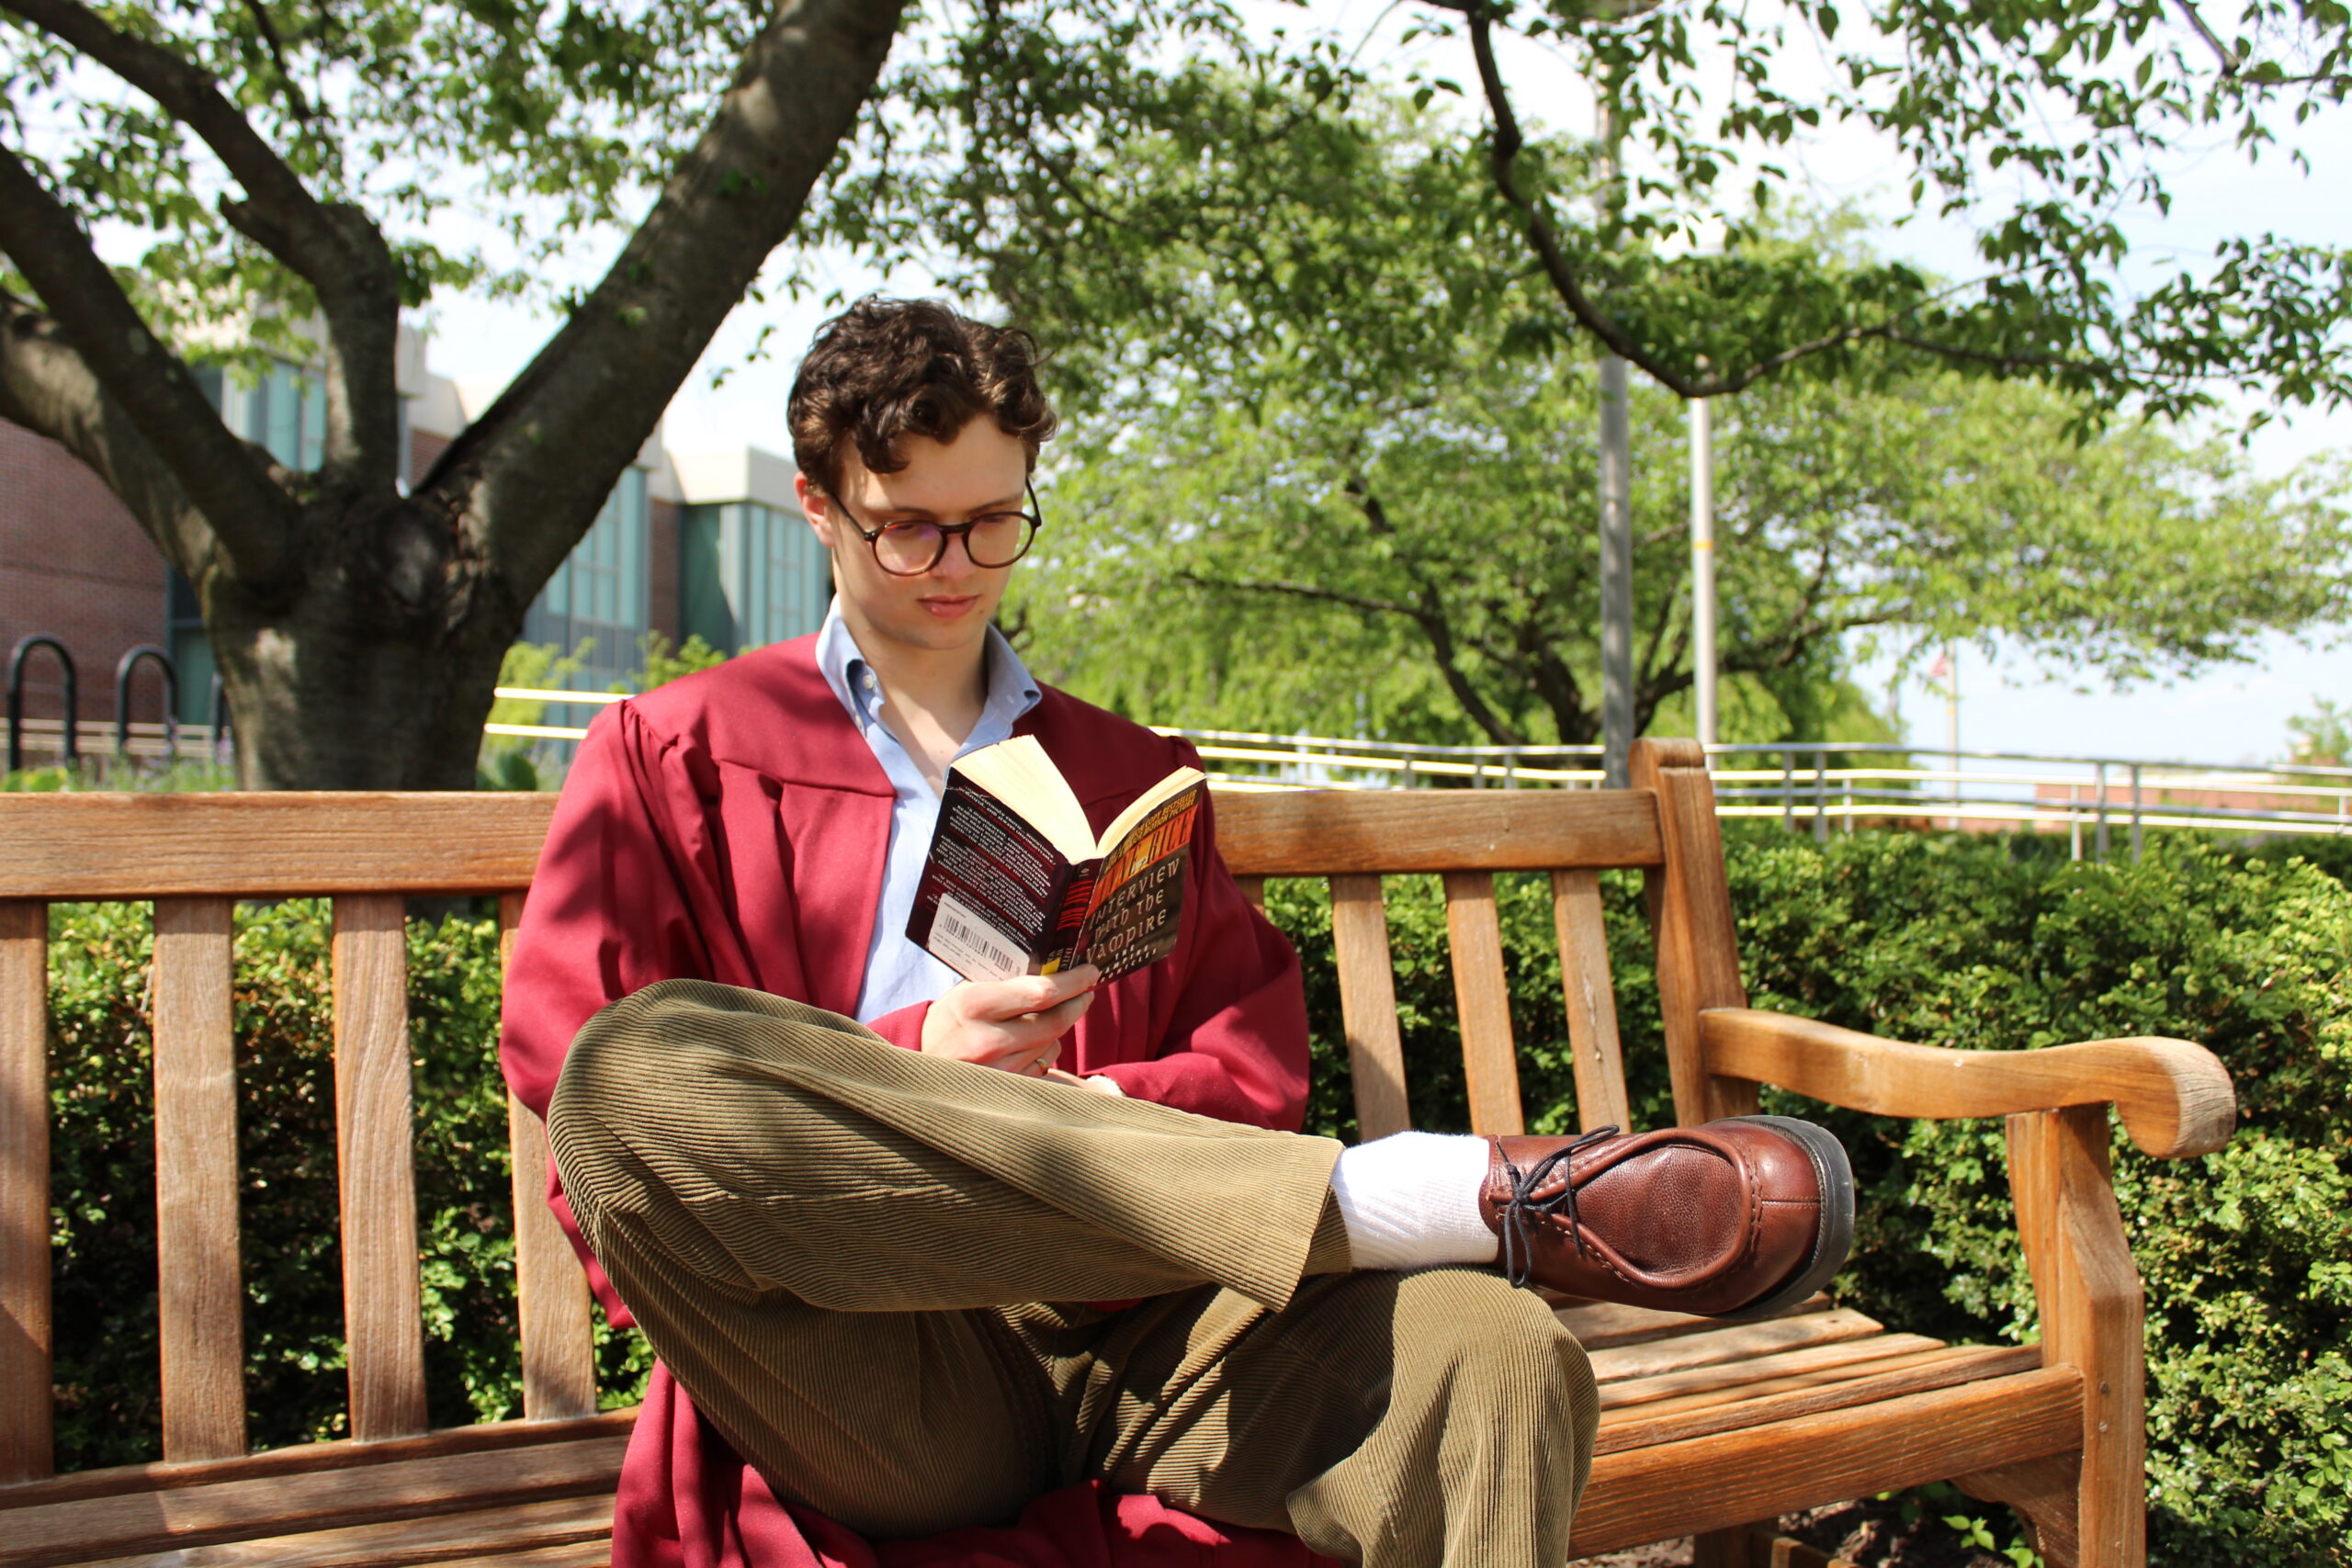 Grad student sitting on bench reading